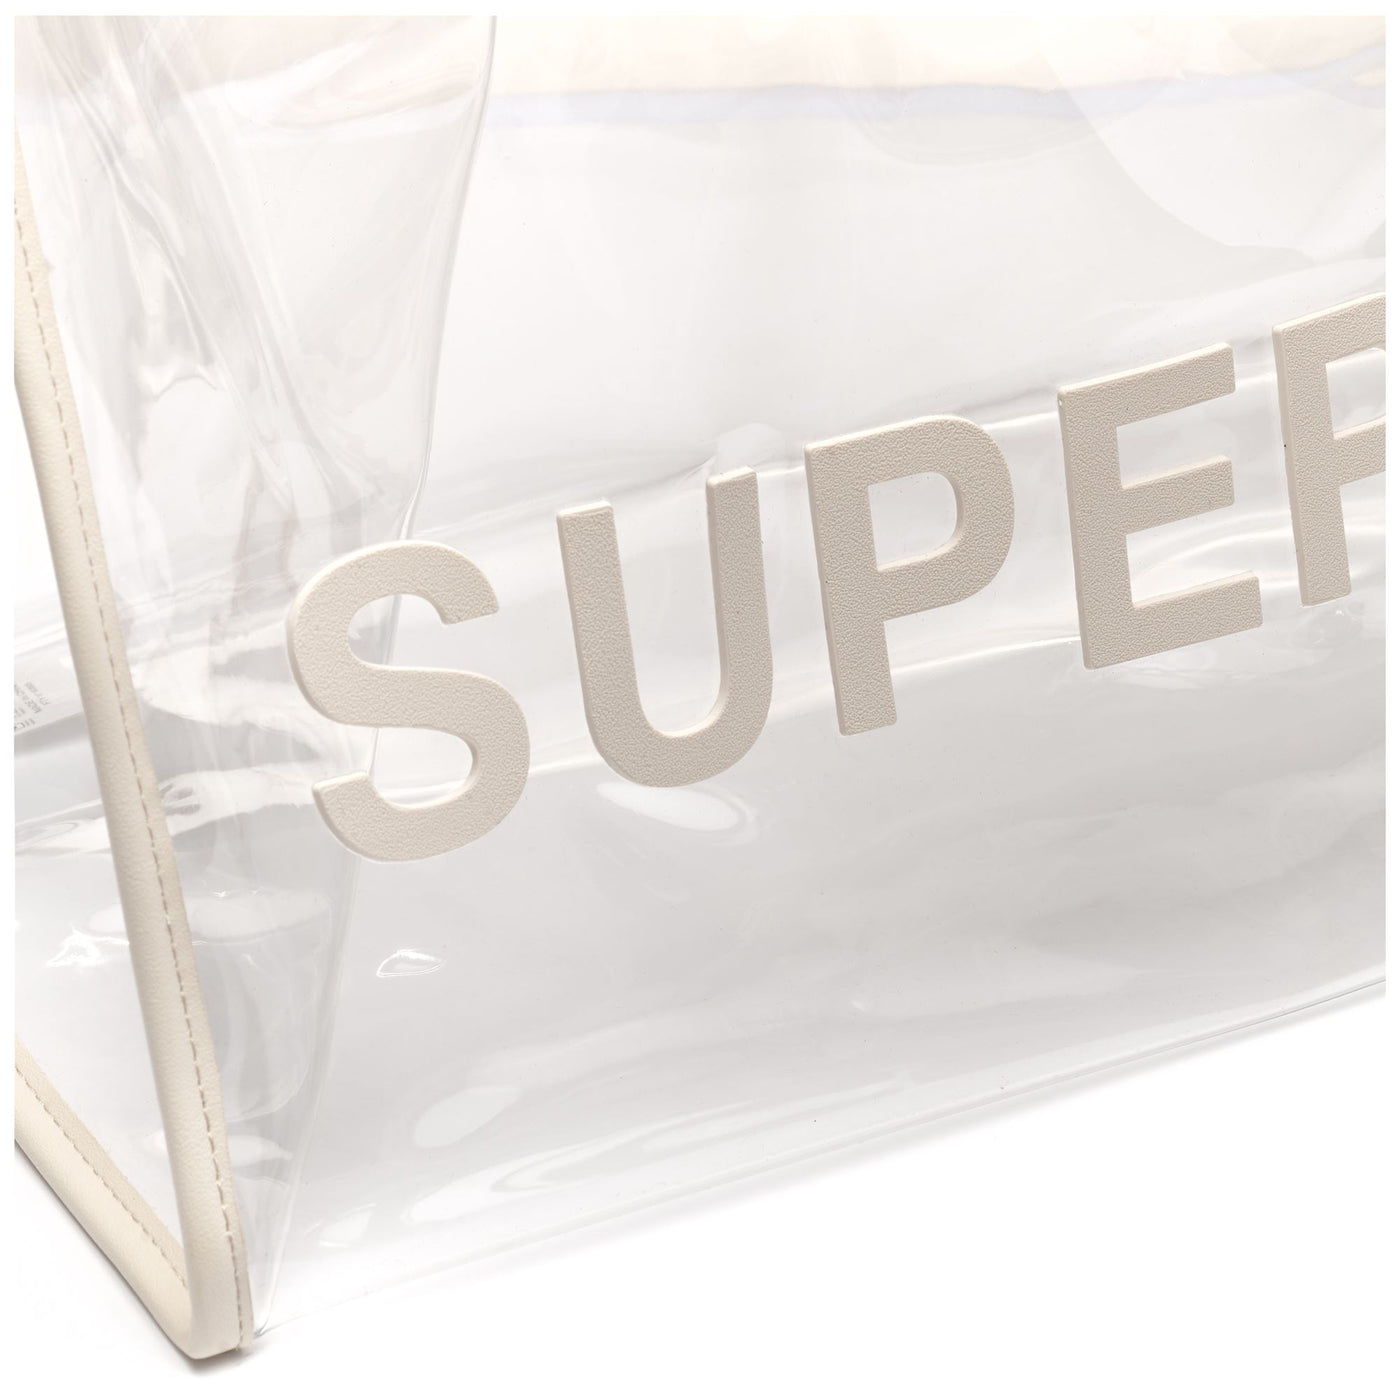 Bags Woman TRANSPARENT SHOPPING BAG Shopping Bag WHITE AVORIO Dressed Back (jpg Rgb)		